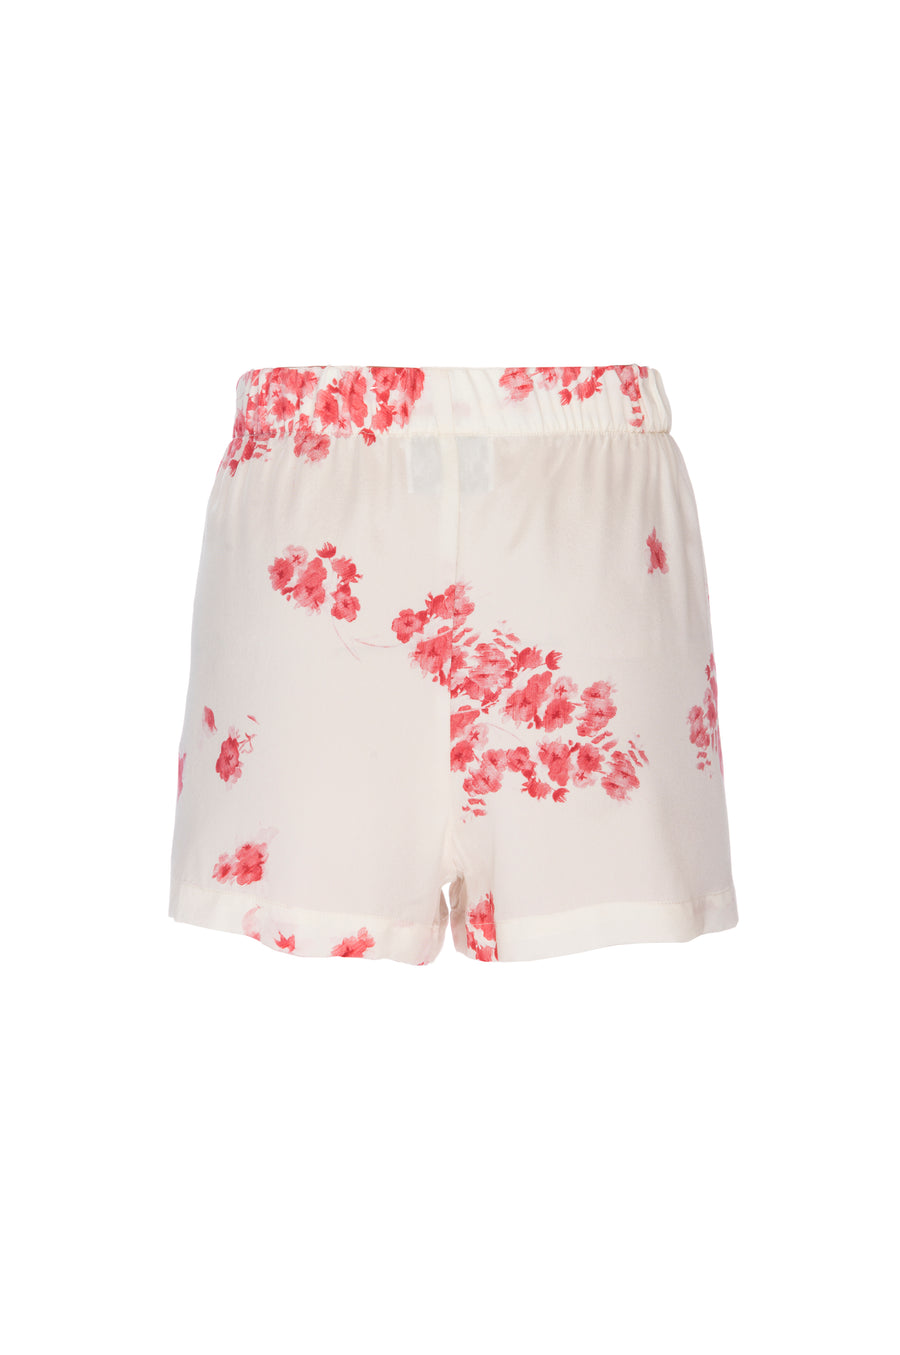 Silk Crepe De Chine PJ Shorts: Cream and Crimson Daisy Print